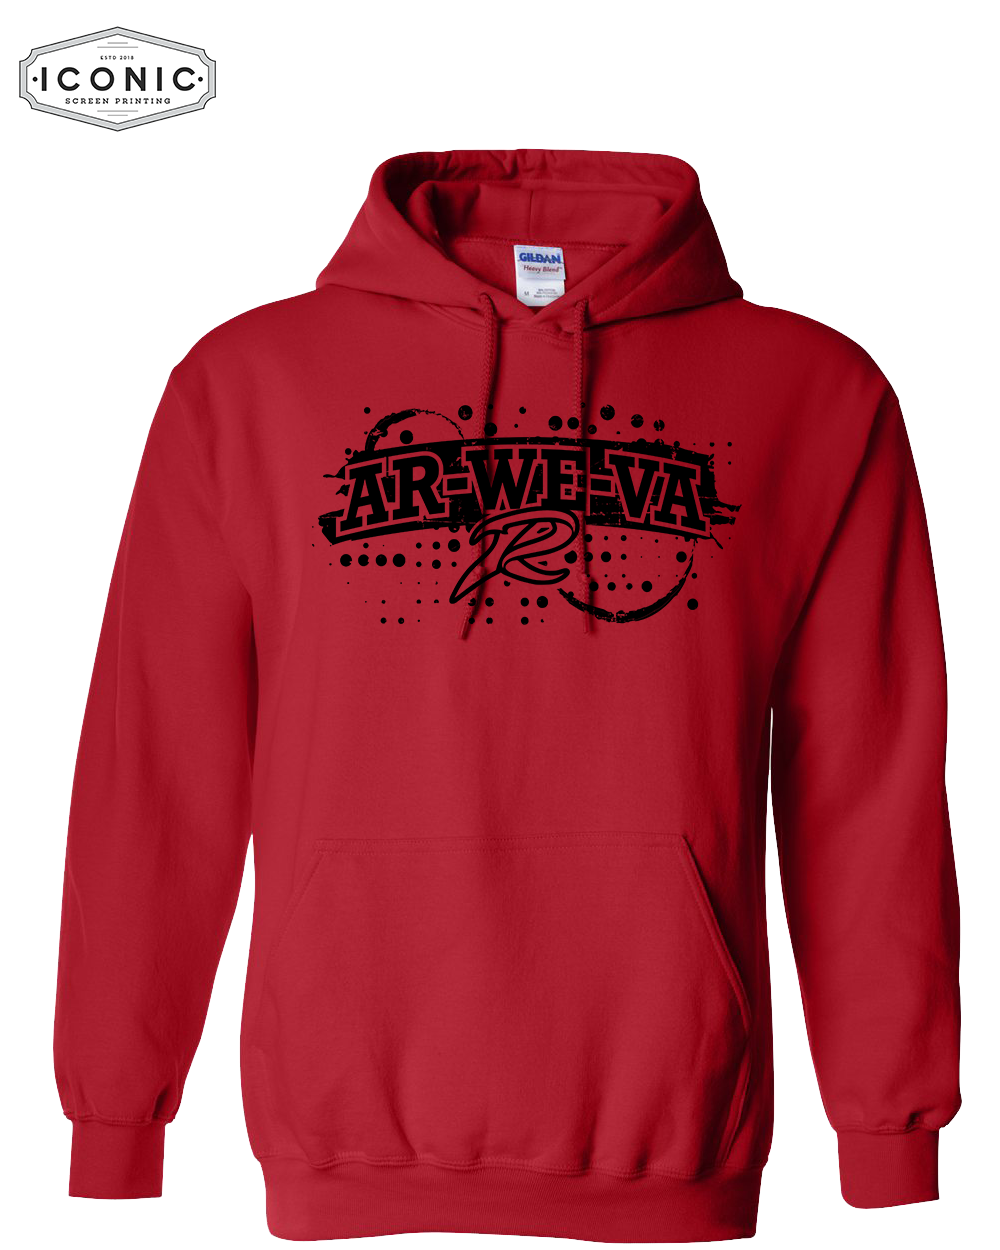 Ar-We-Va Rockets - Heavy Blend Hooded Sweatshirt